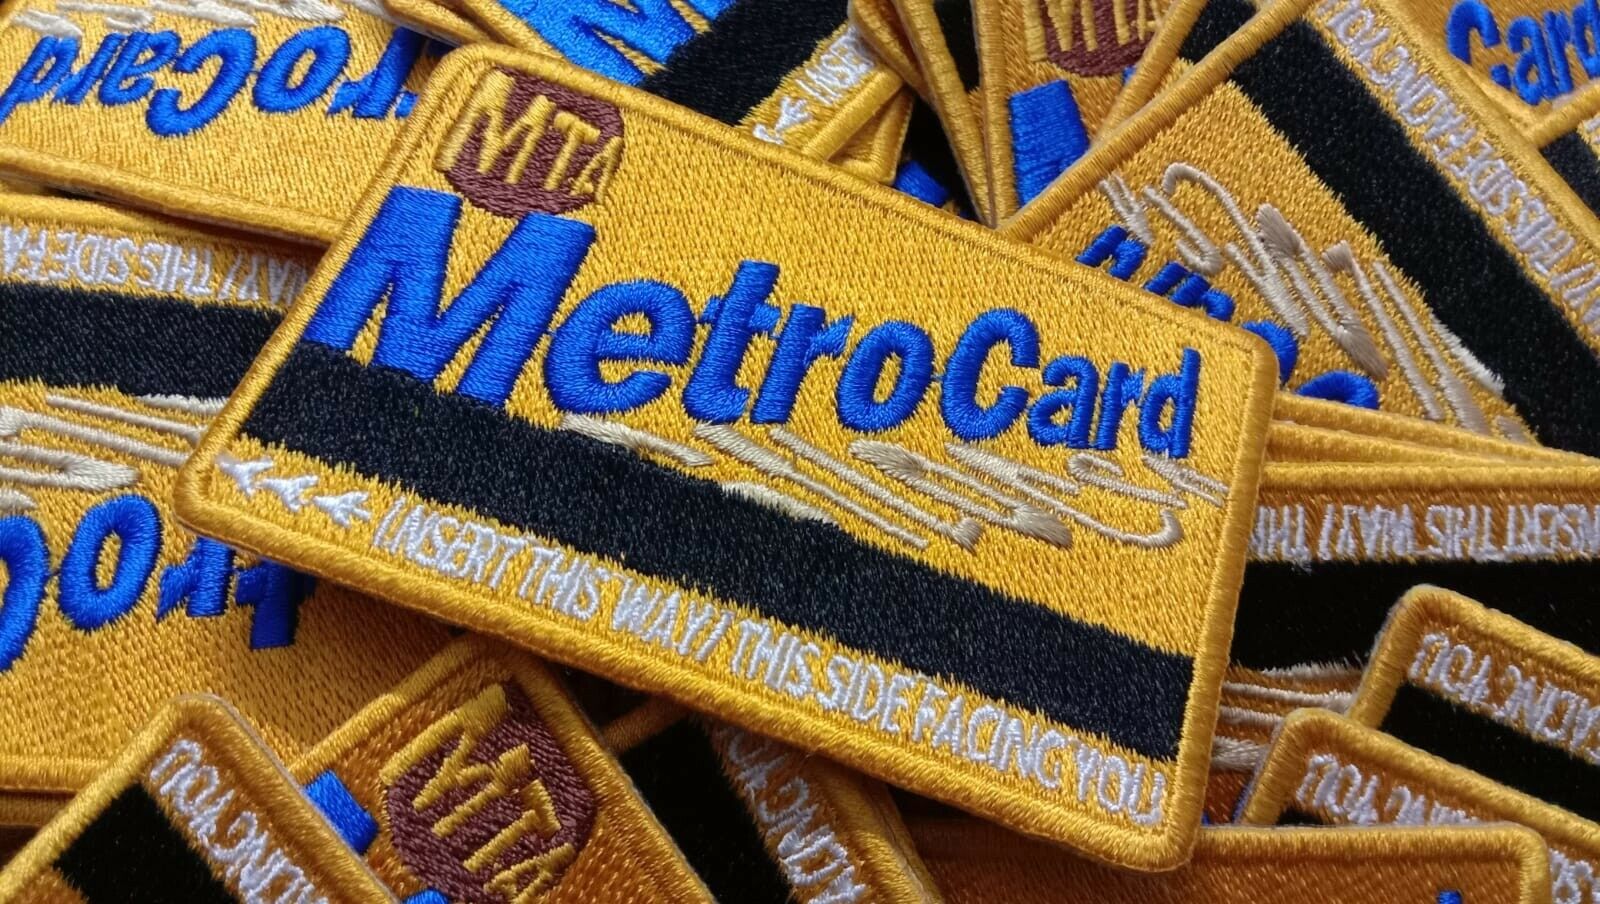 Metro Card Patch credit card size mta nyc souvenir 